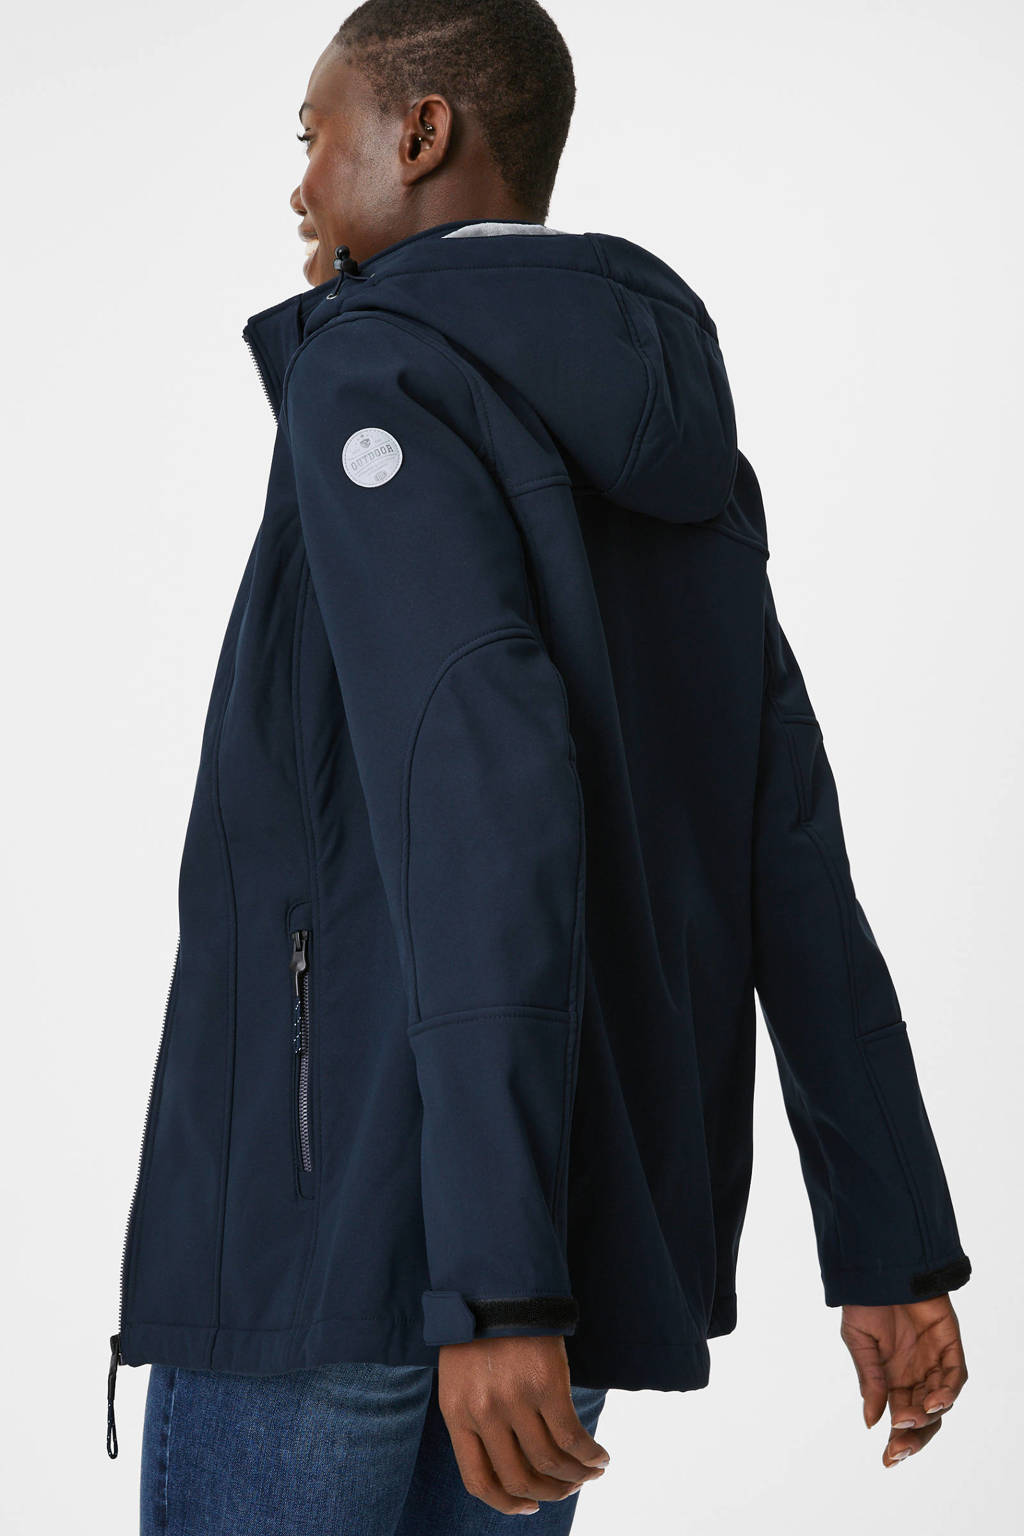 Donkerblauwe dames C&A softshell jas van polyester met lange mouwen, capuchon, ritssluiting en patches